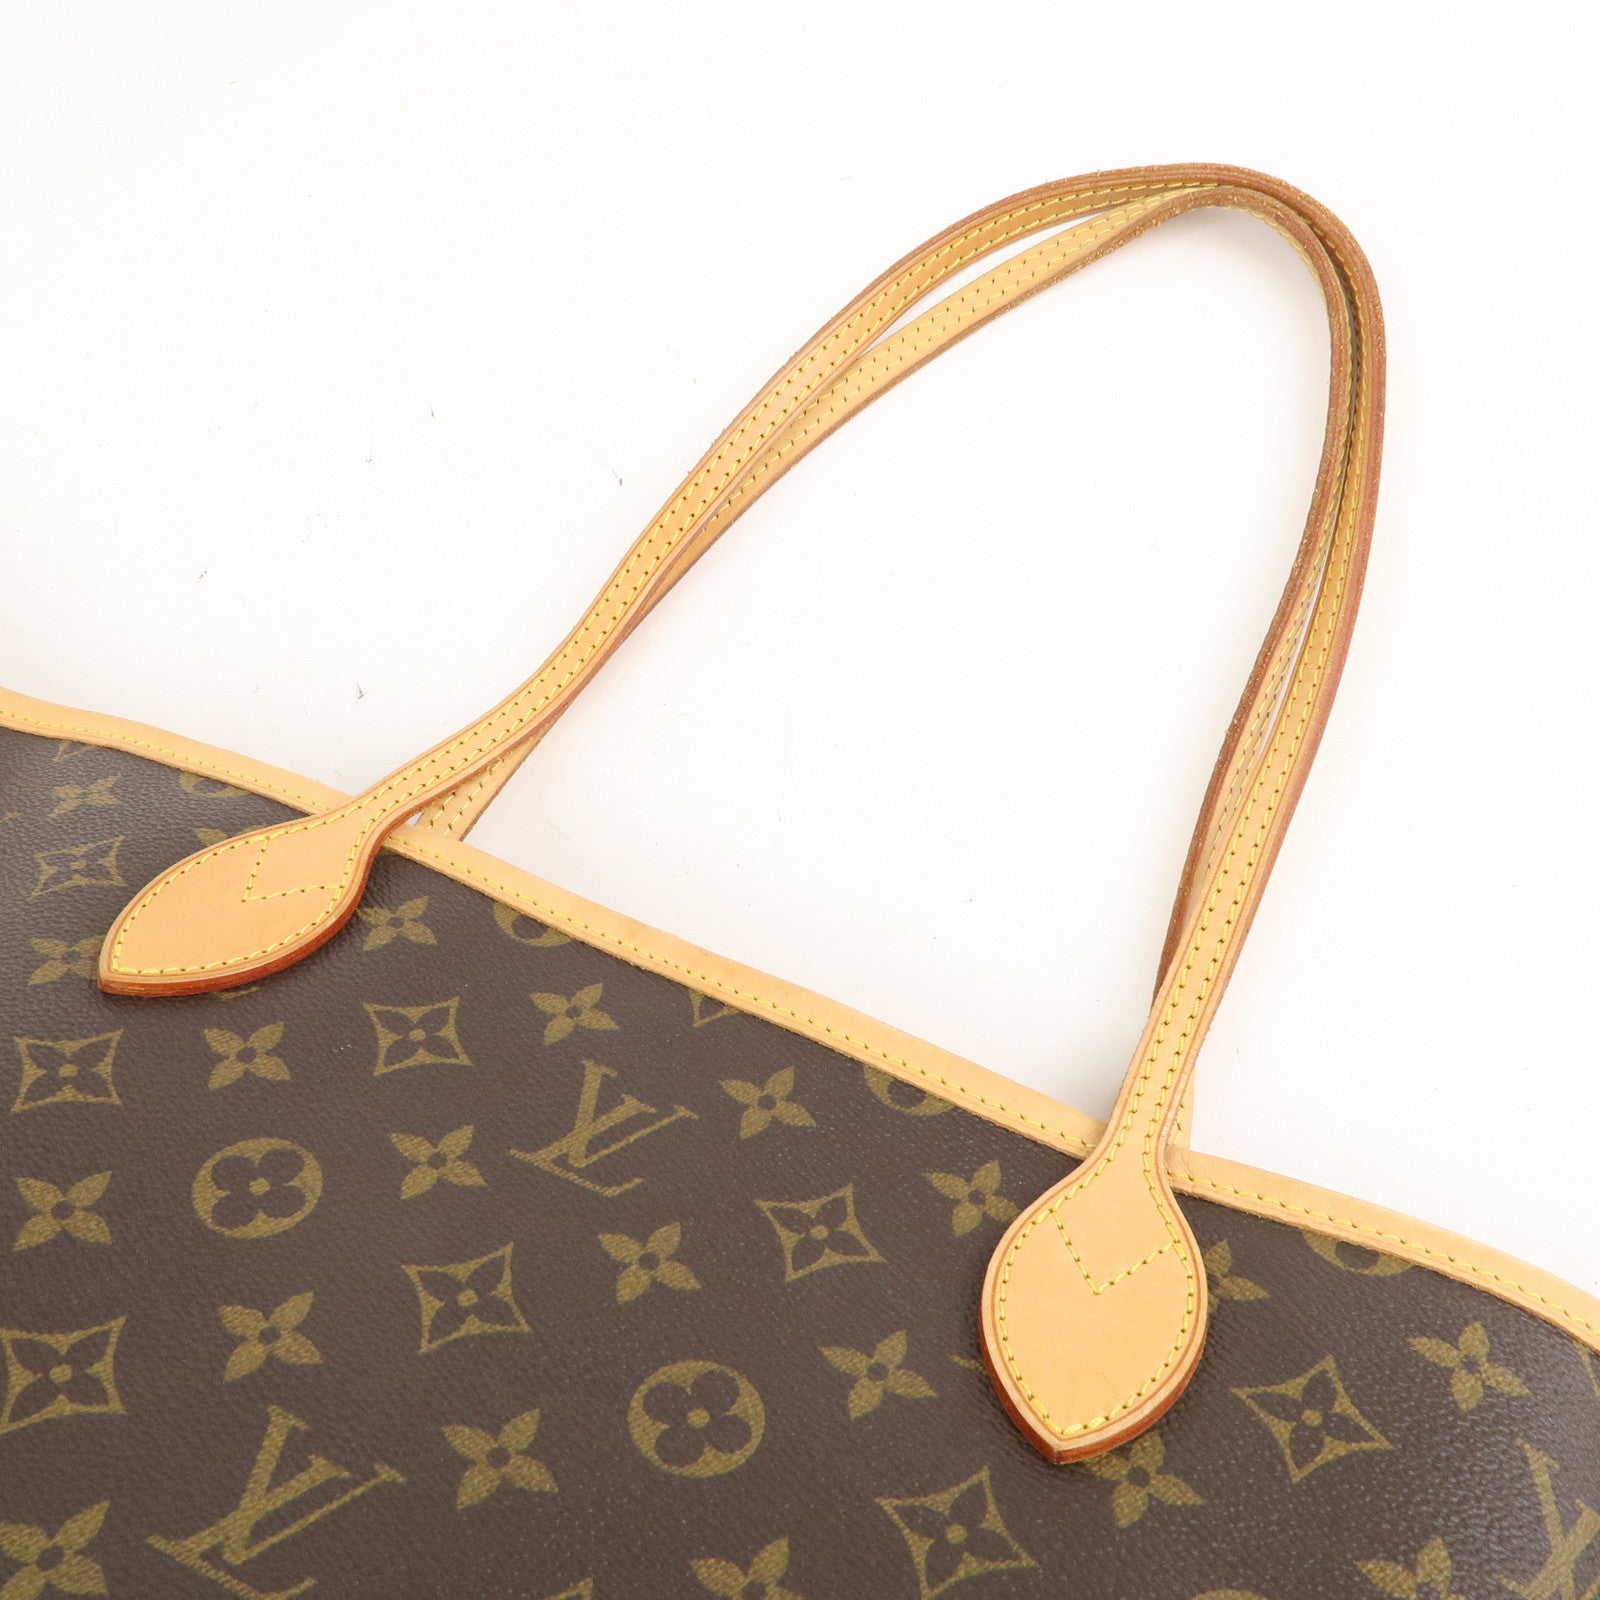 Tote - Bag - Vuitton - M40157 – dct - Louis - Monogram - Sac